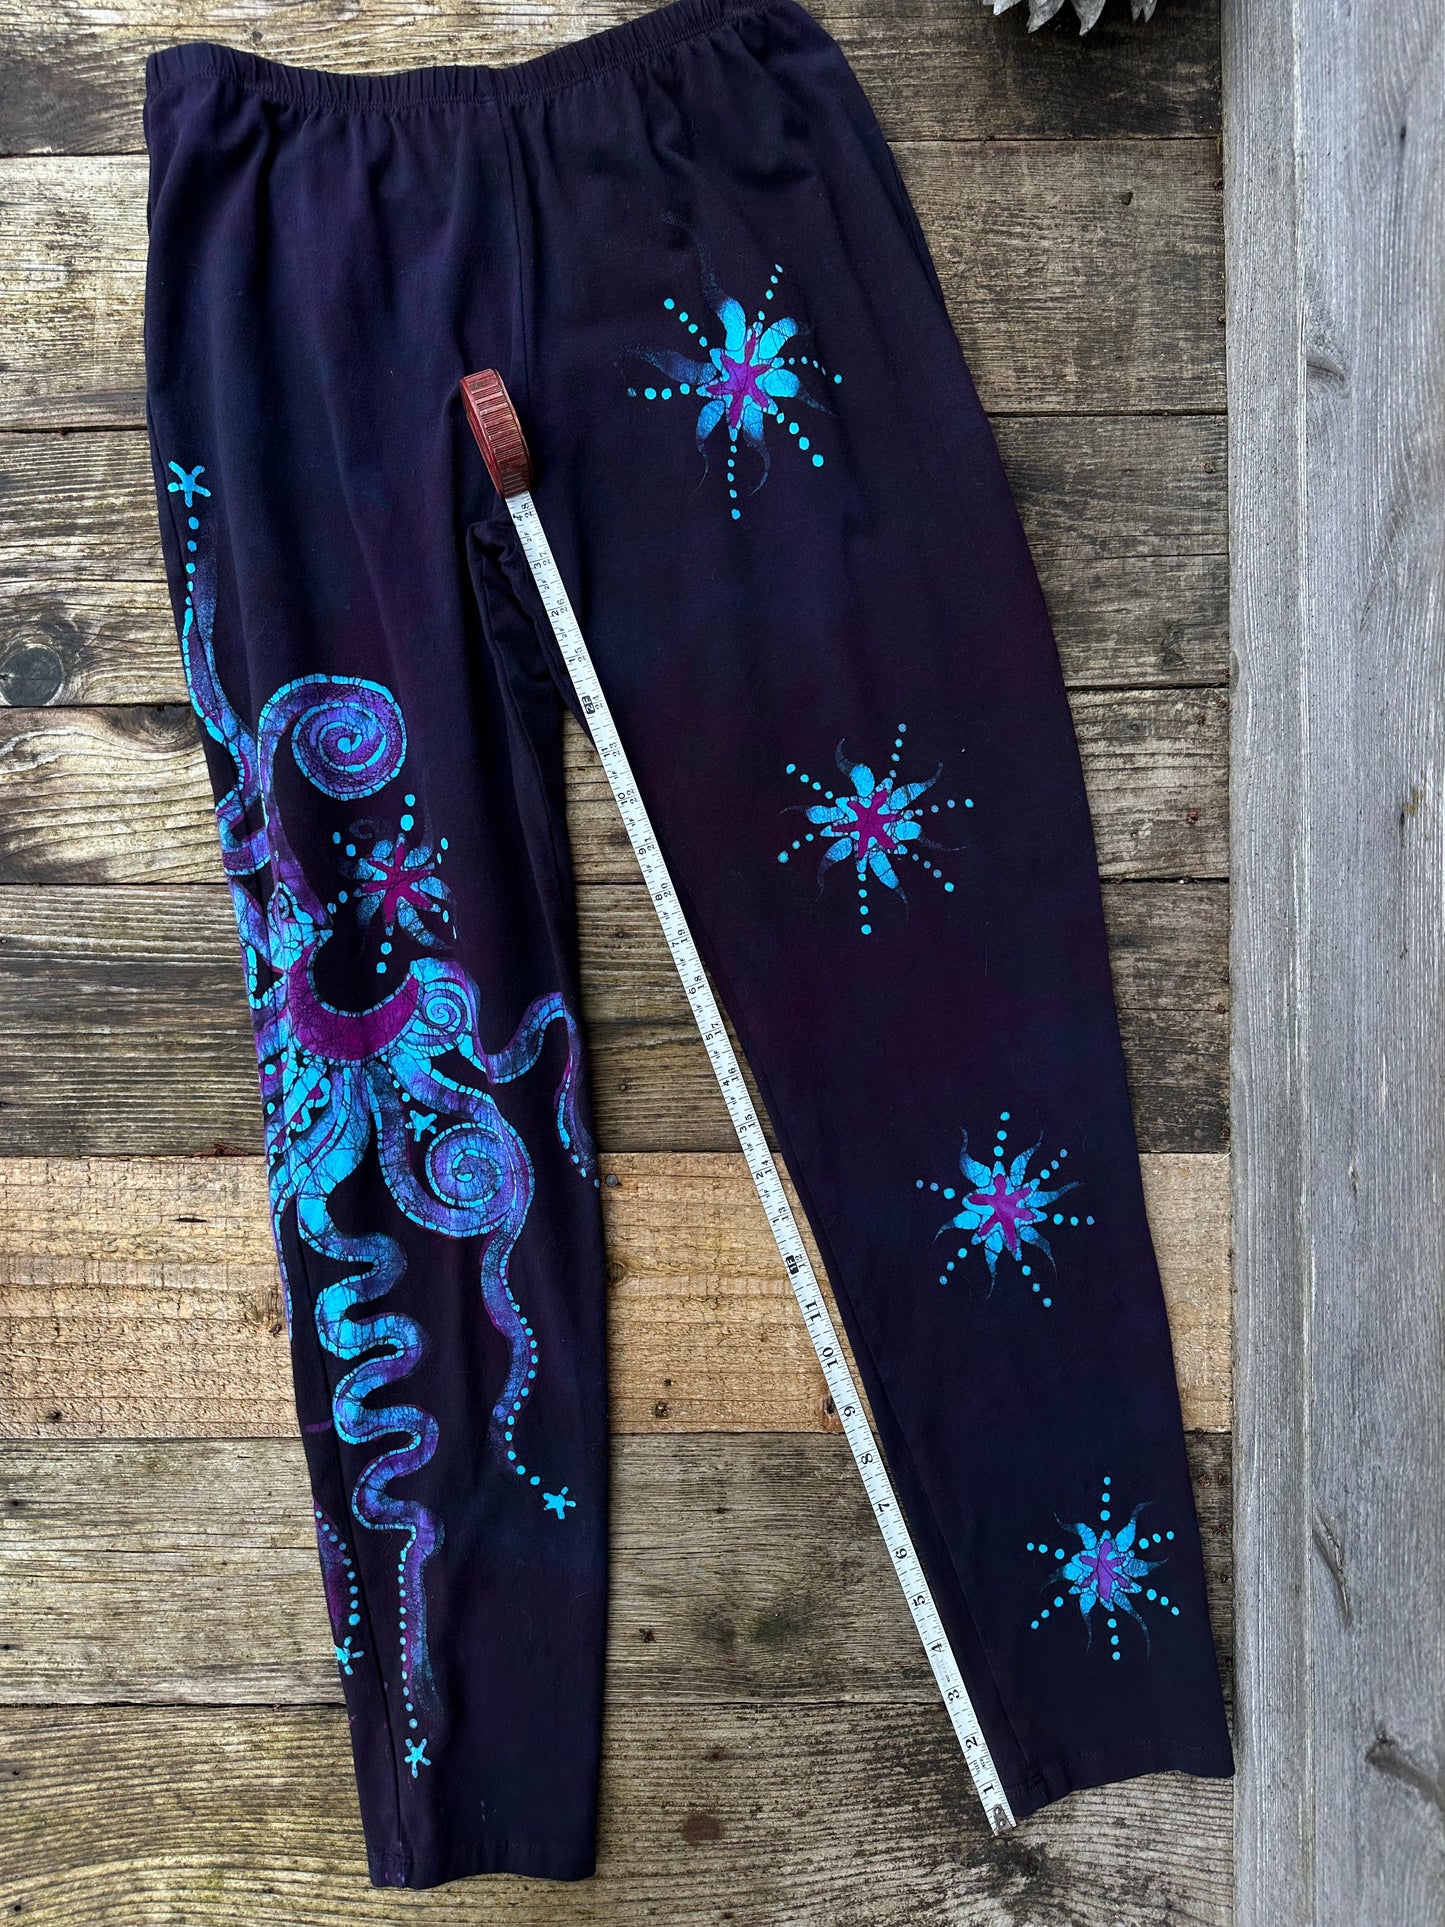 Deep Purple and Turquoise Moon and Star Batik Leggings - Size XL LONG leggings batikwalla 